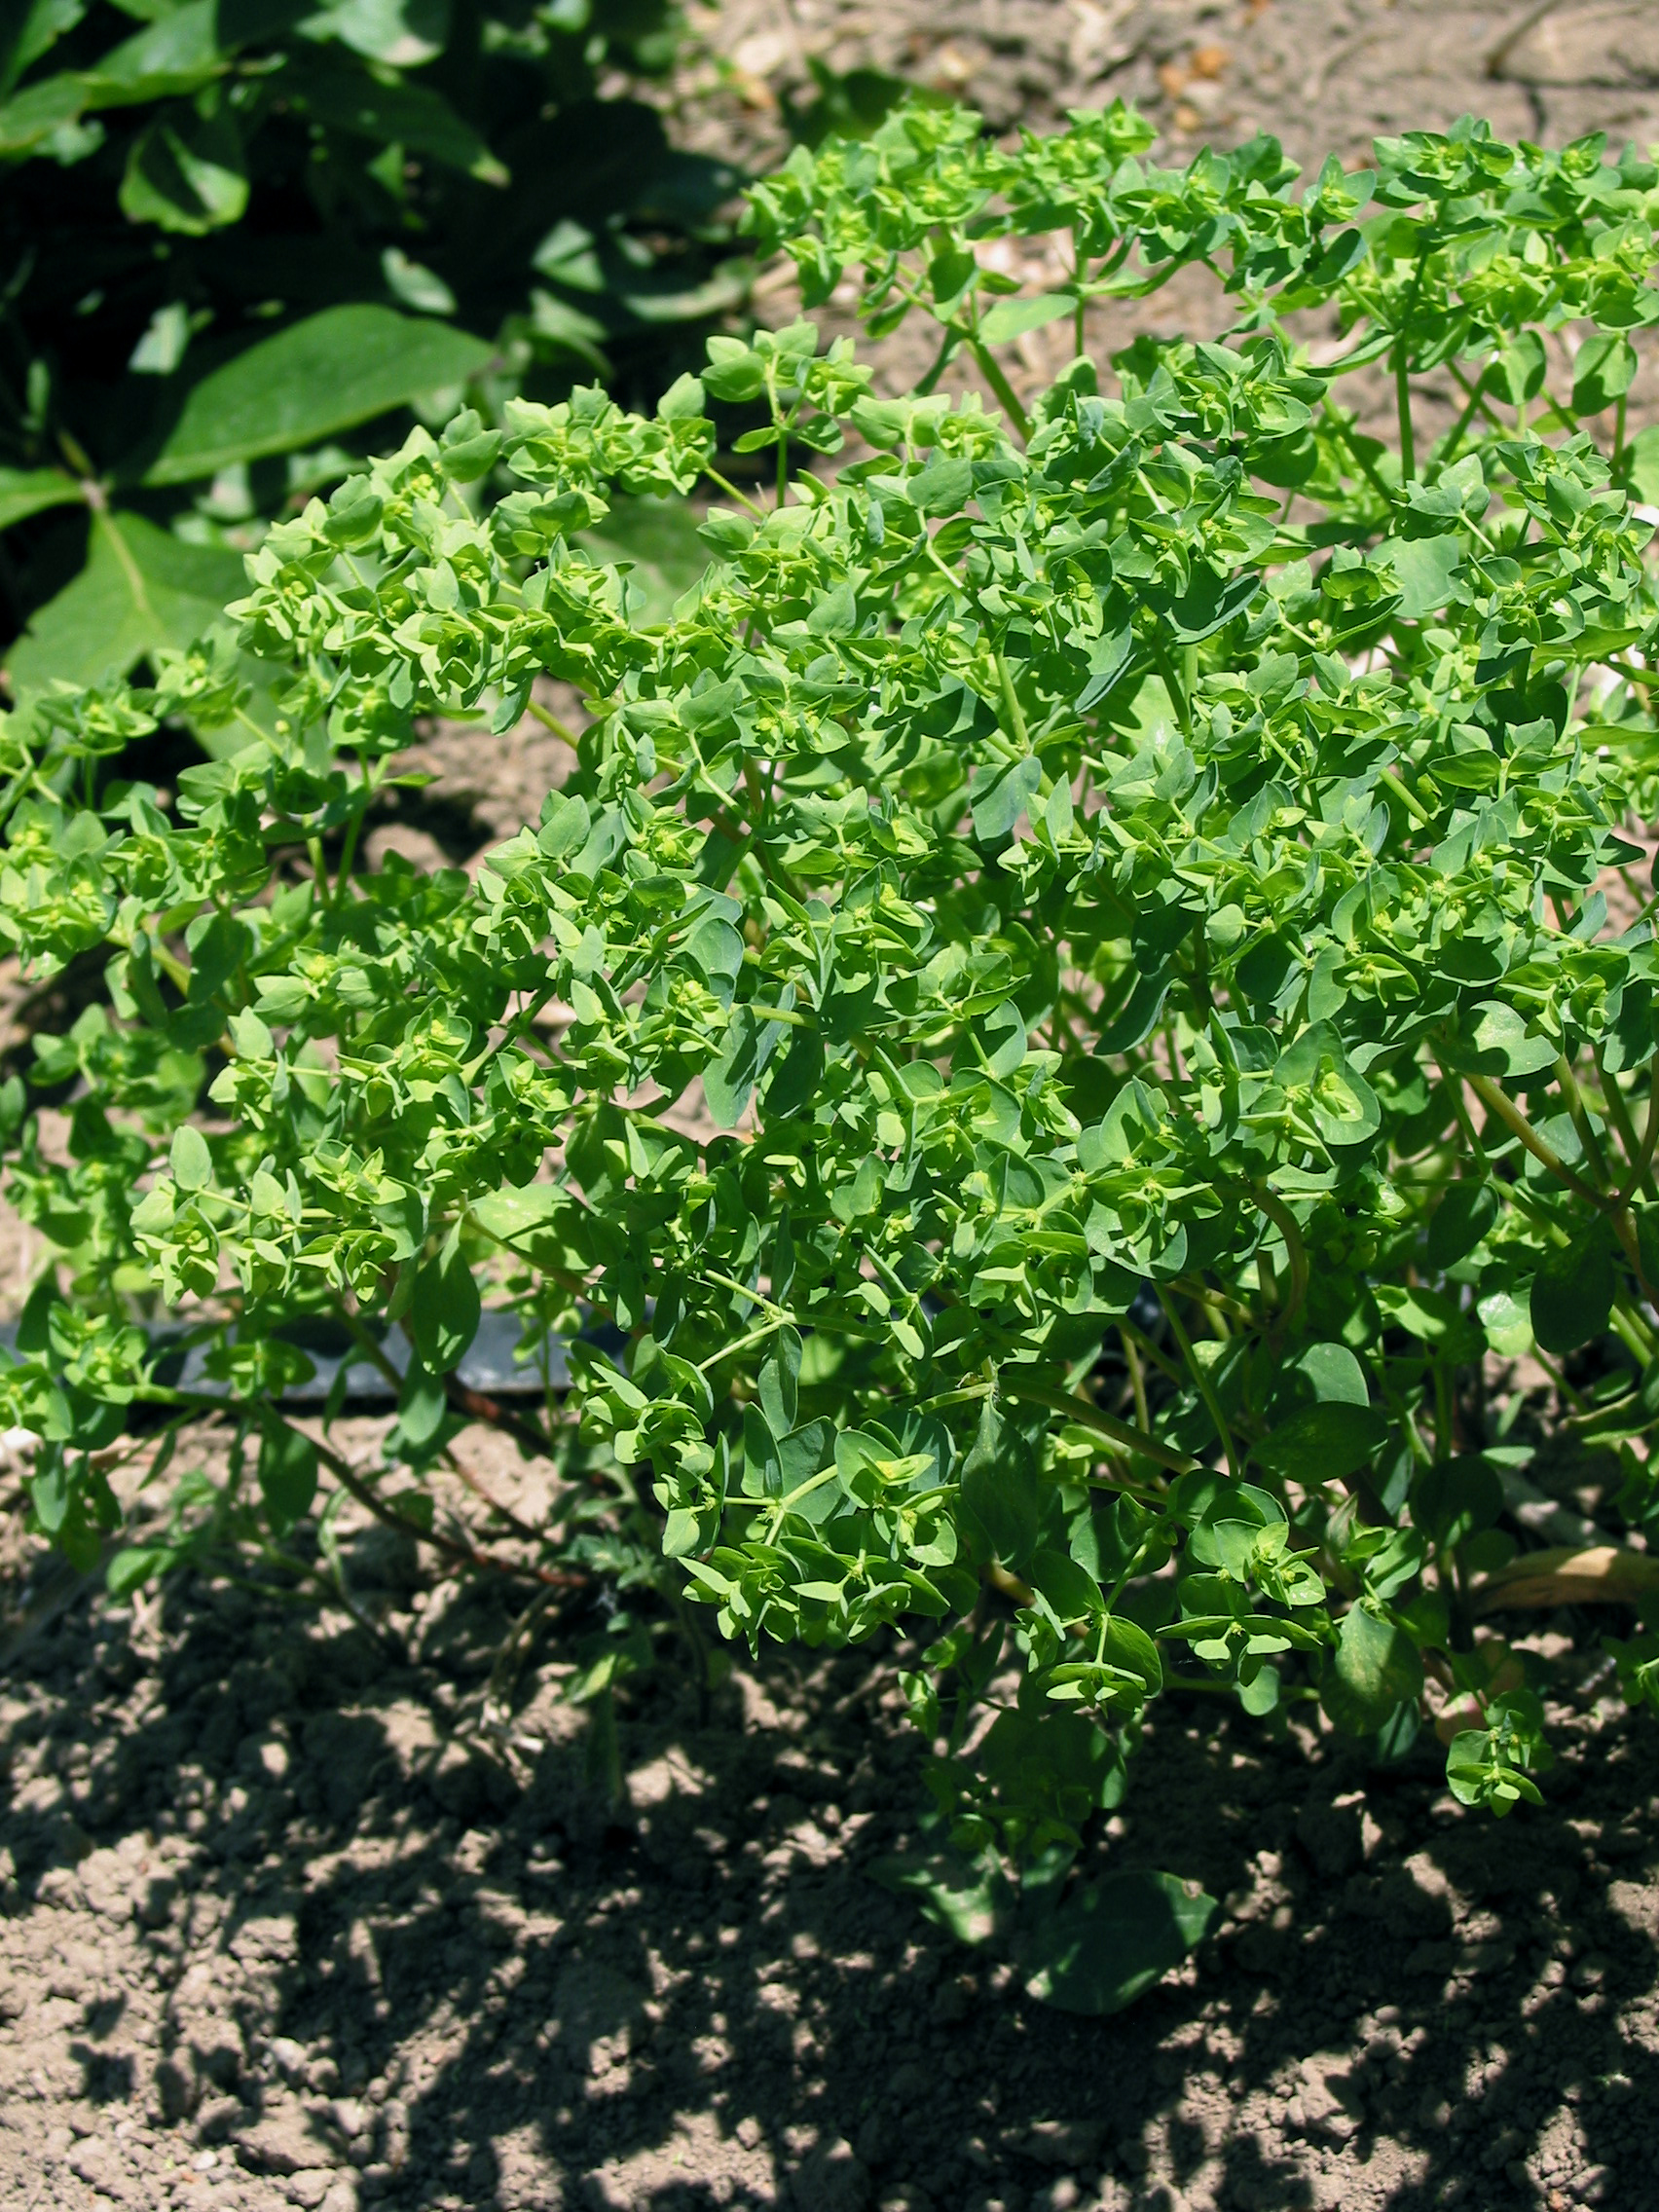 petty spurge (Euphorbia peplus)
